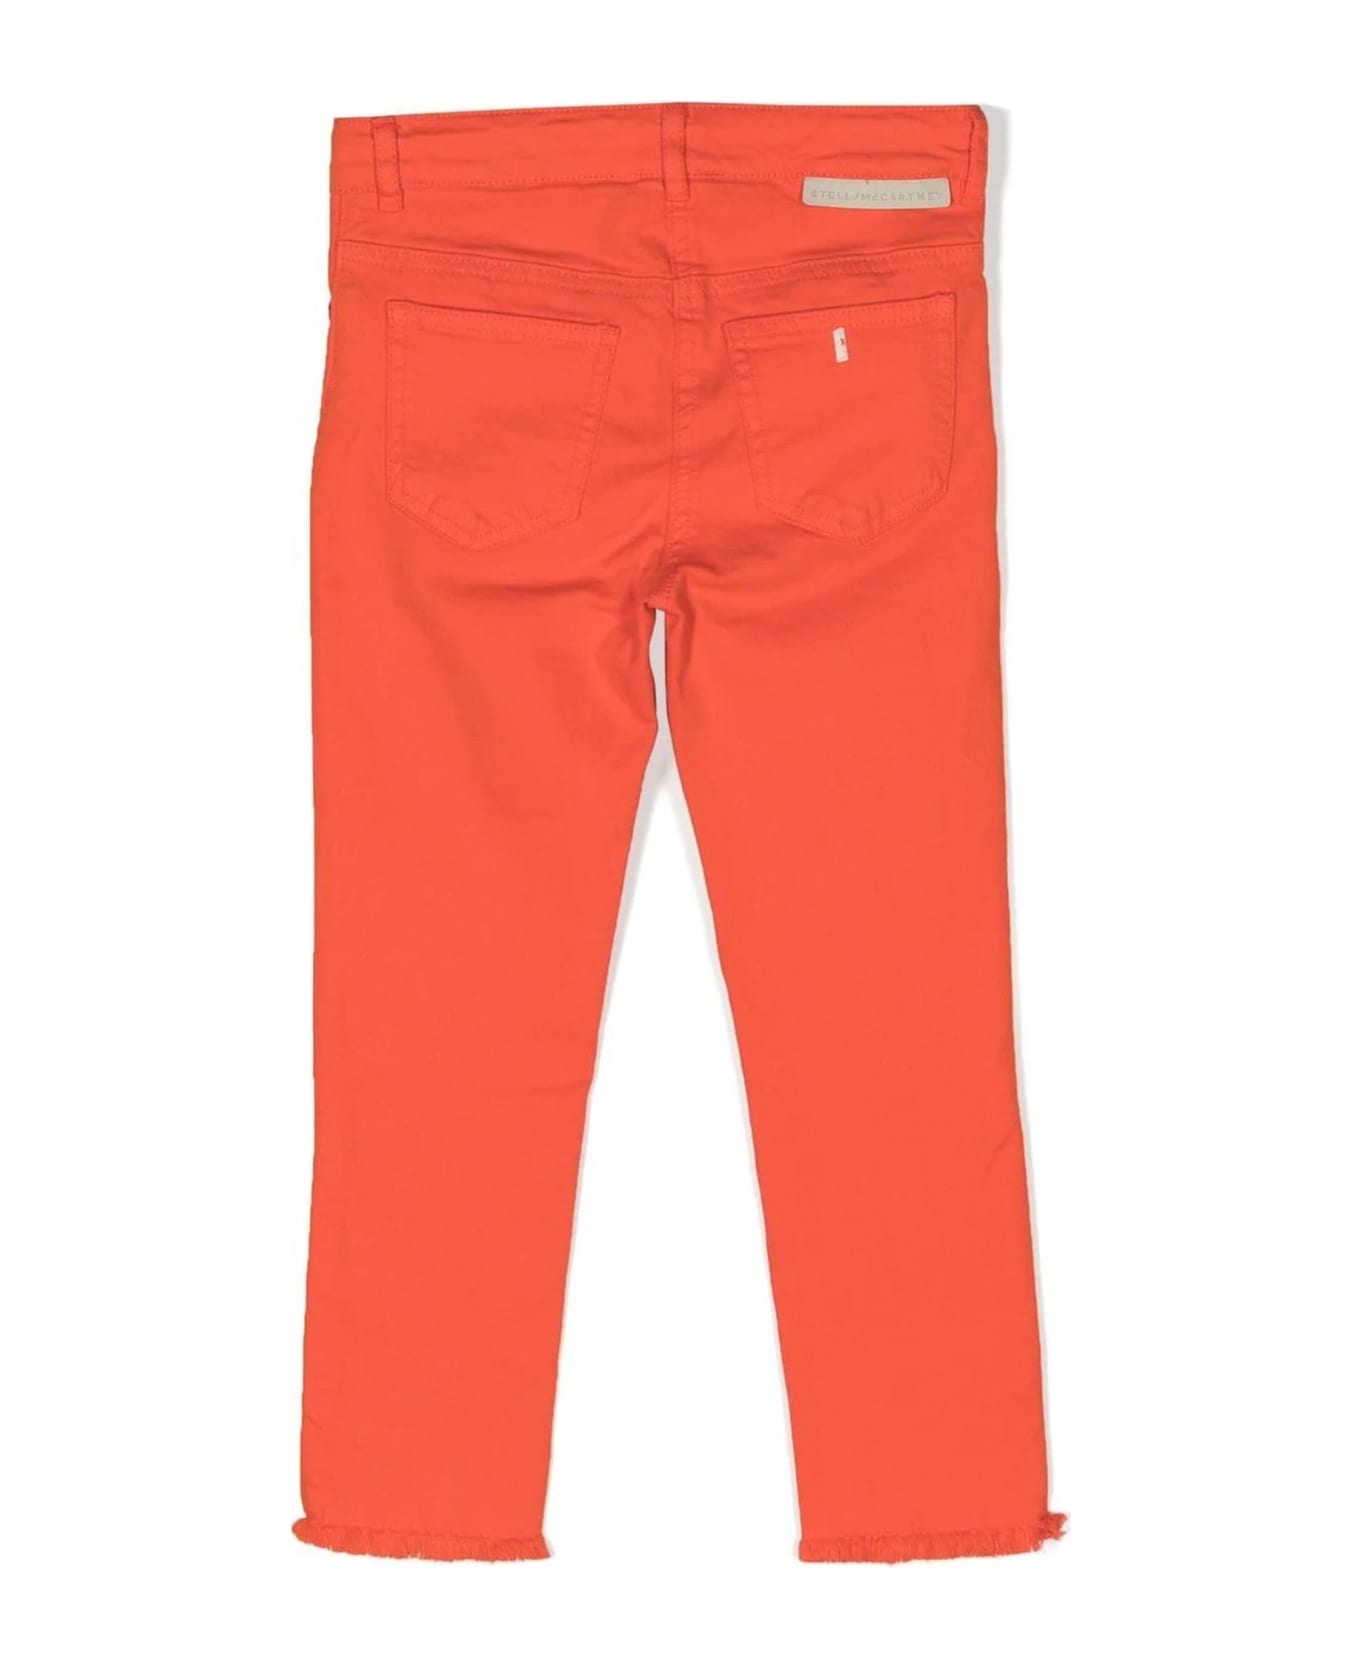 Stella McCartney Kids Trousers Orange - Orange